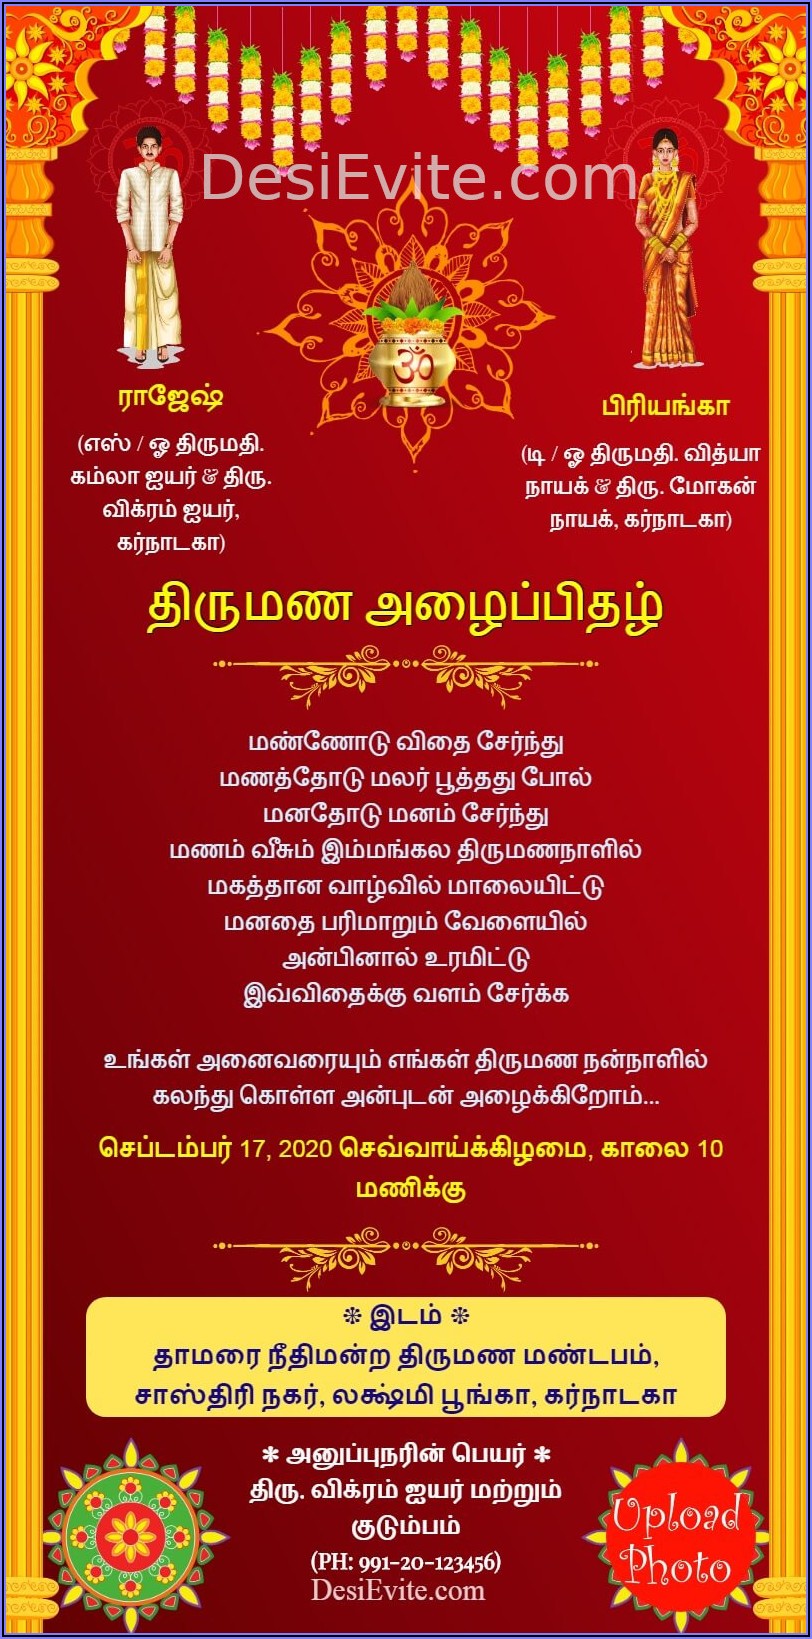 60th Wedding Anniversary Invitation Wording Samples In Tamil